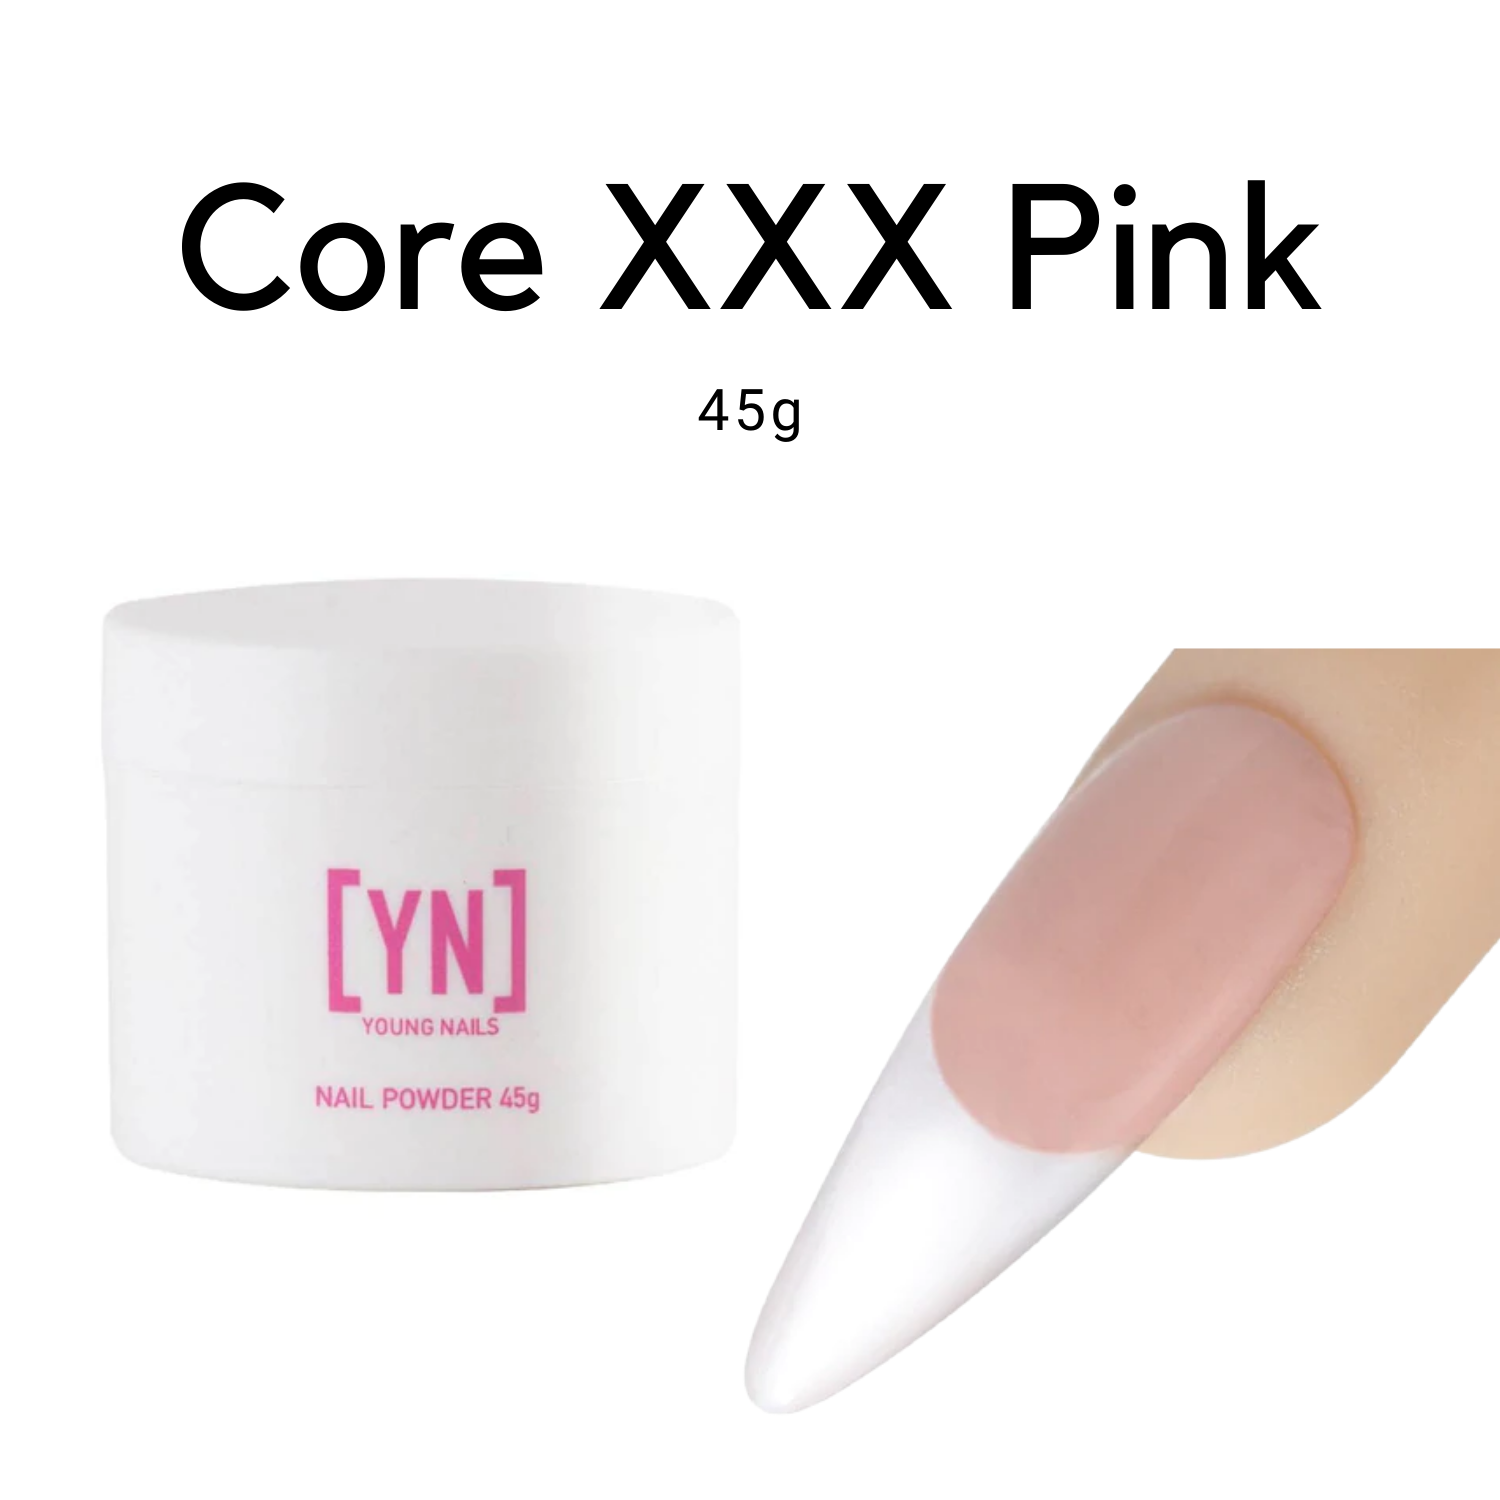 Core XXX Pink